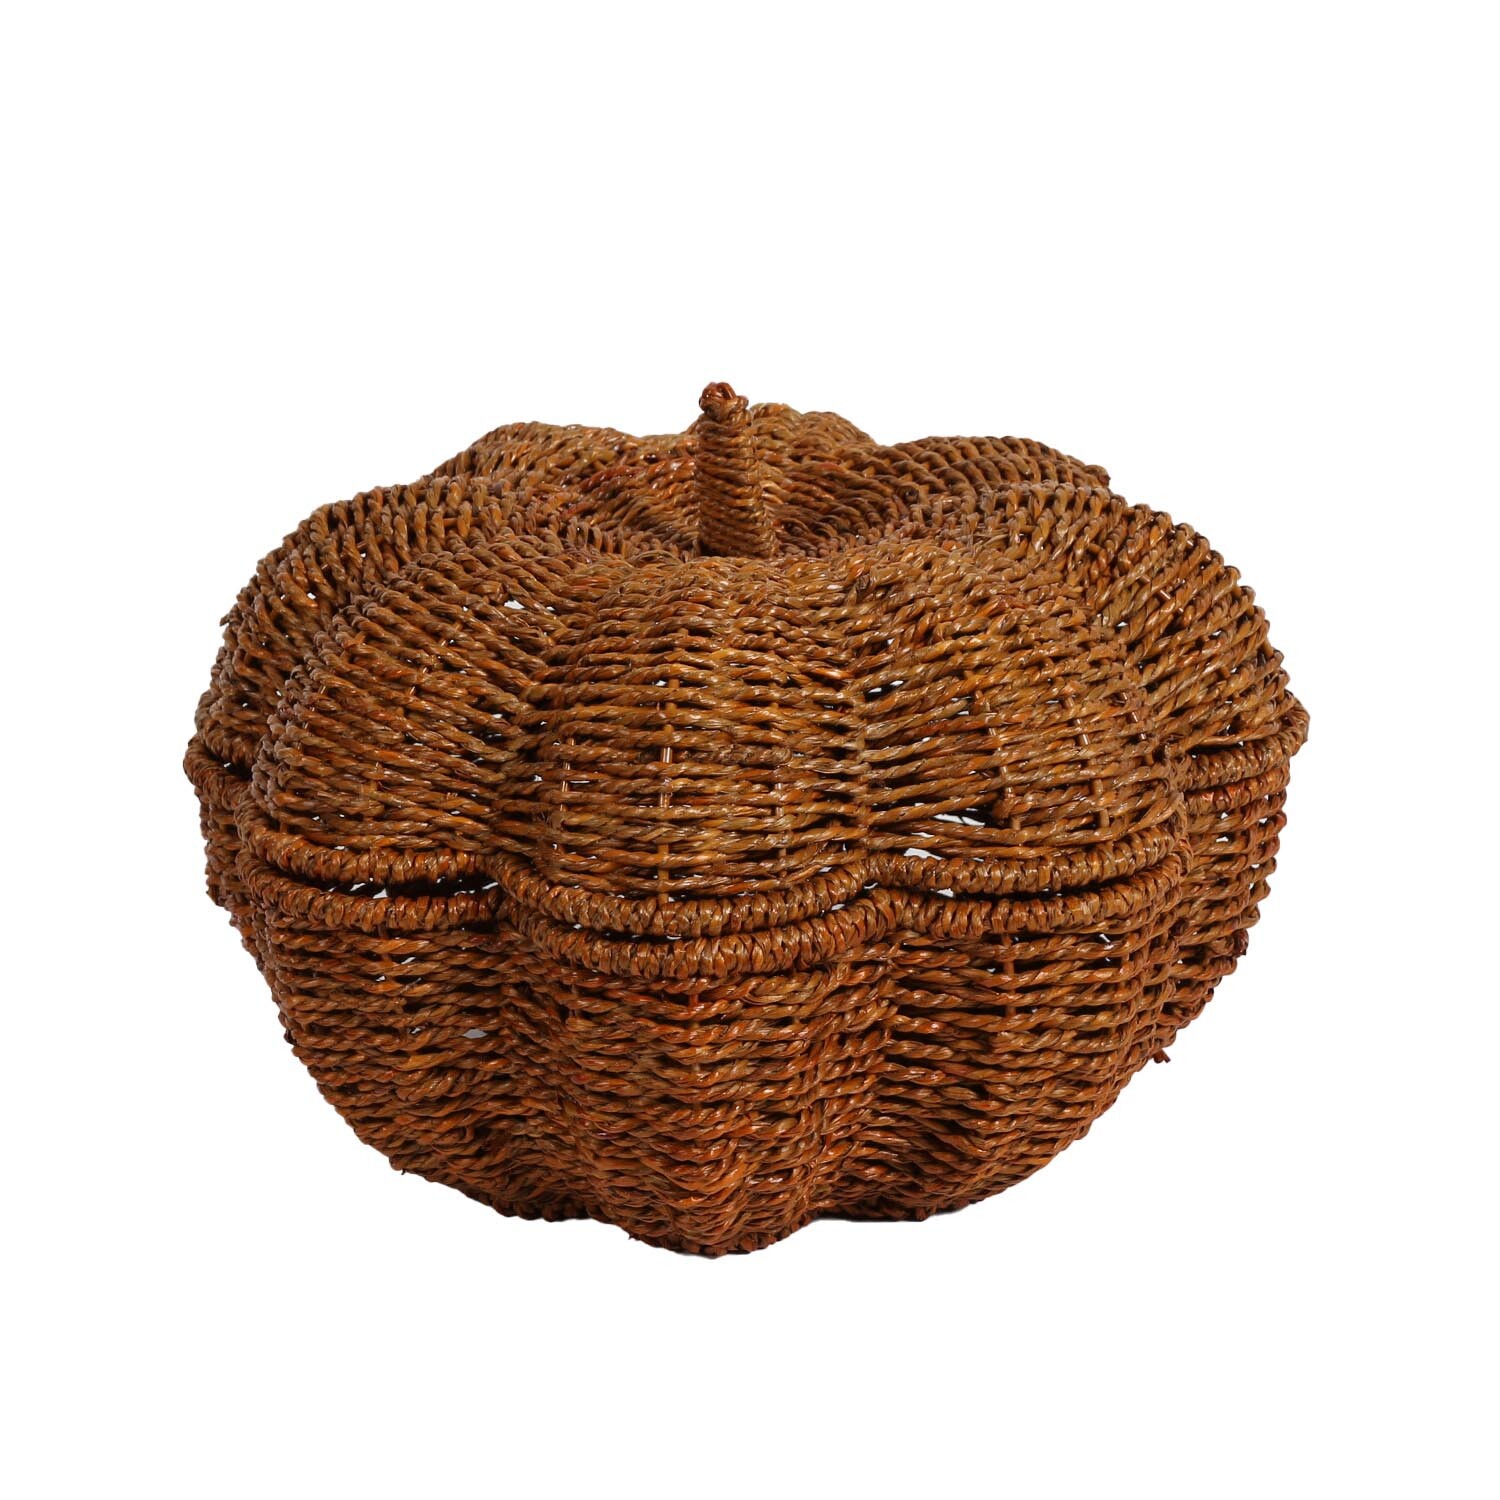 Autumnal Pumpkin Basket - Brown Image 2